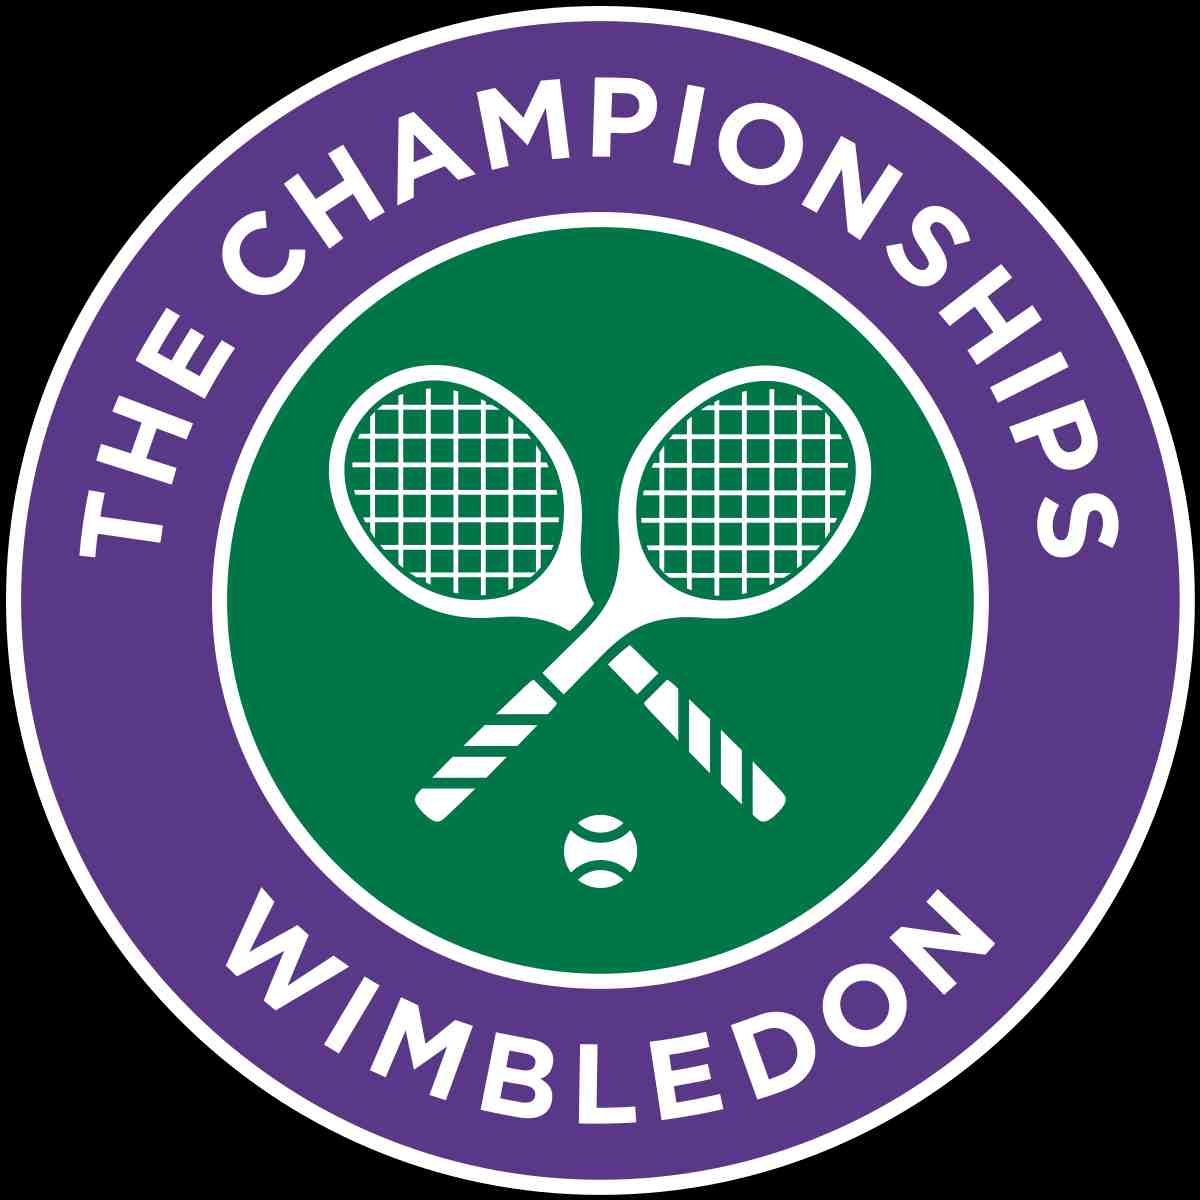 MTL-Wimbledon Turnuvası 